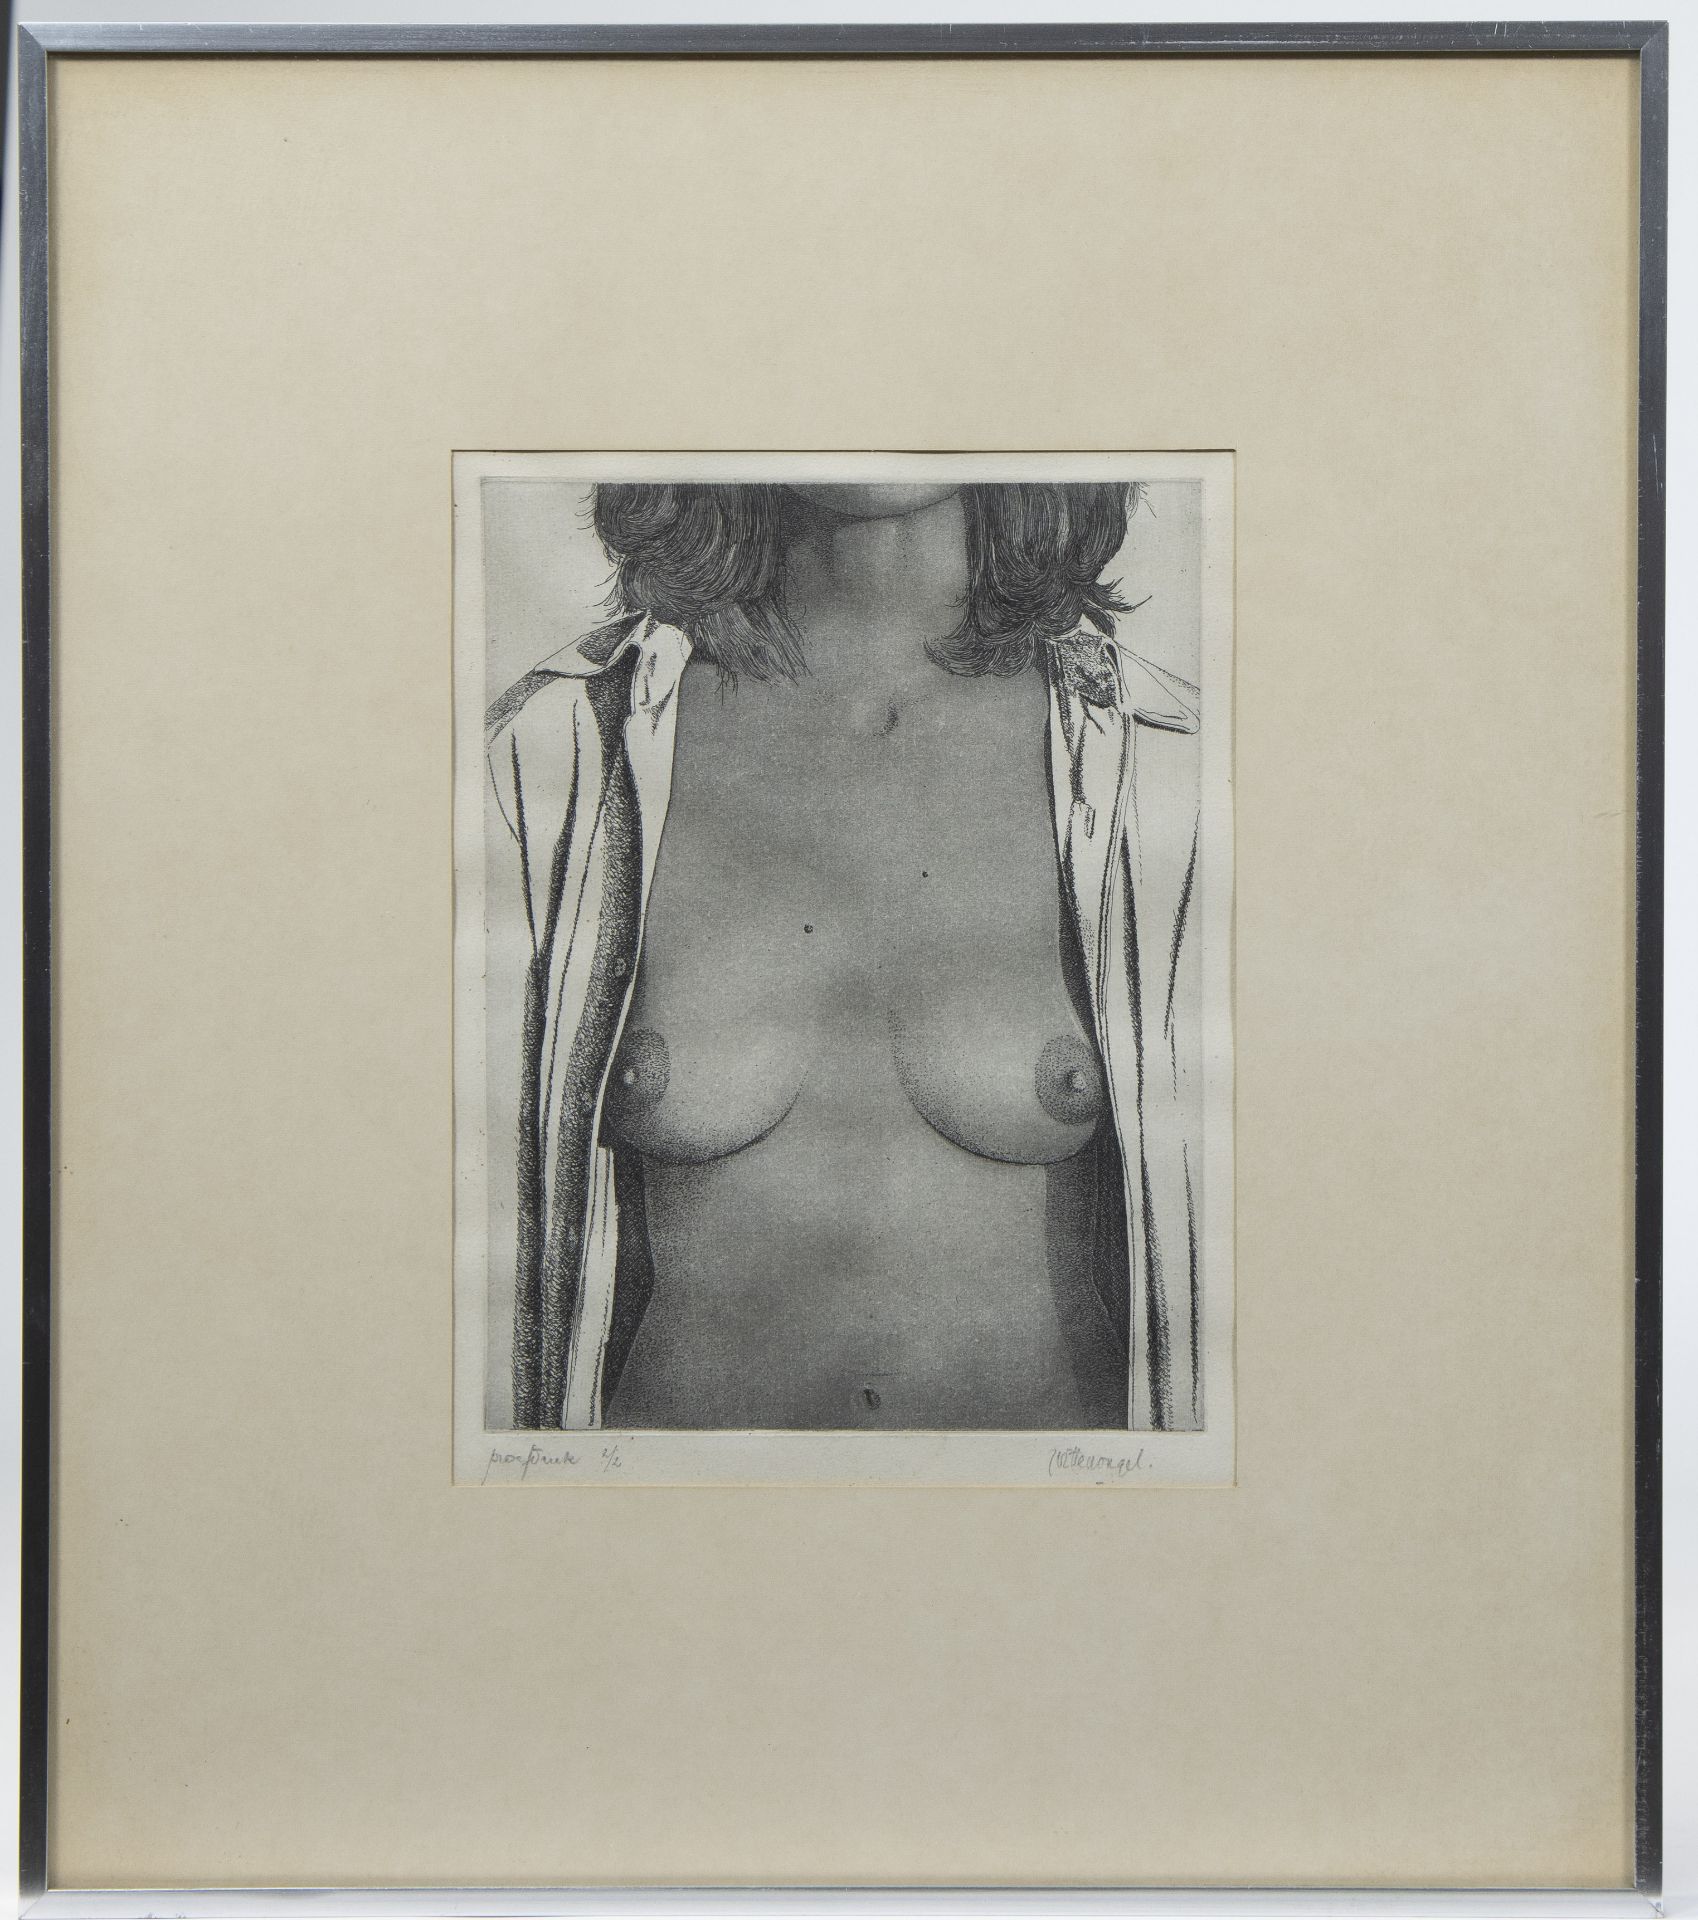 Roger Marcel WITTEVRONGEL (1933), etching Nude, proof 2/2, signed - Image 2 of 4